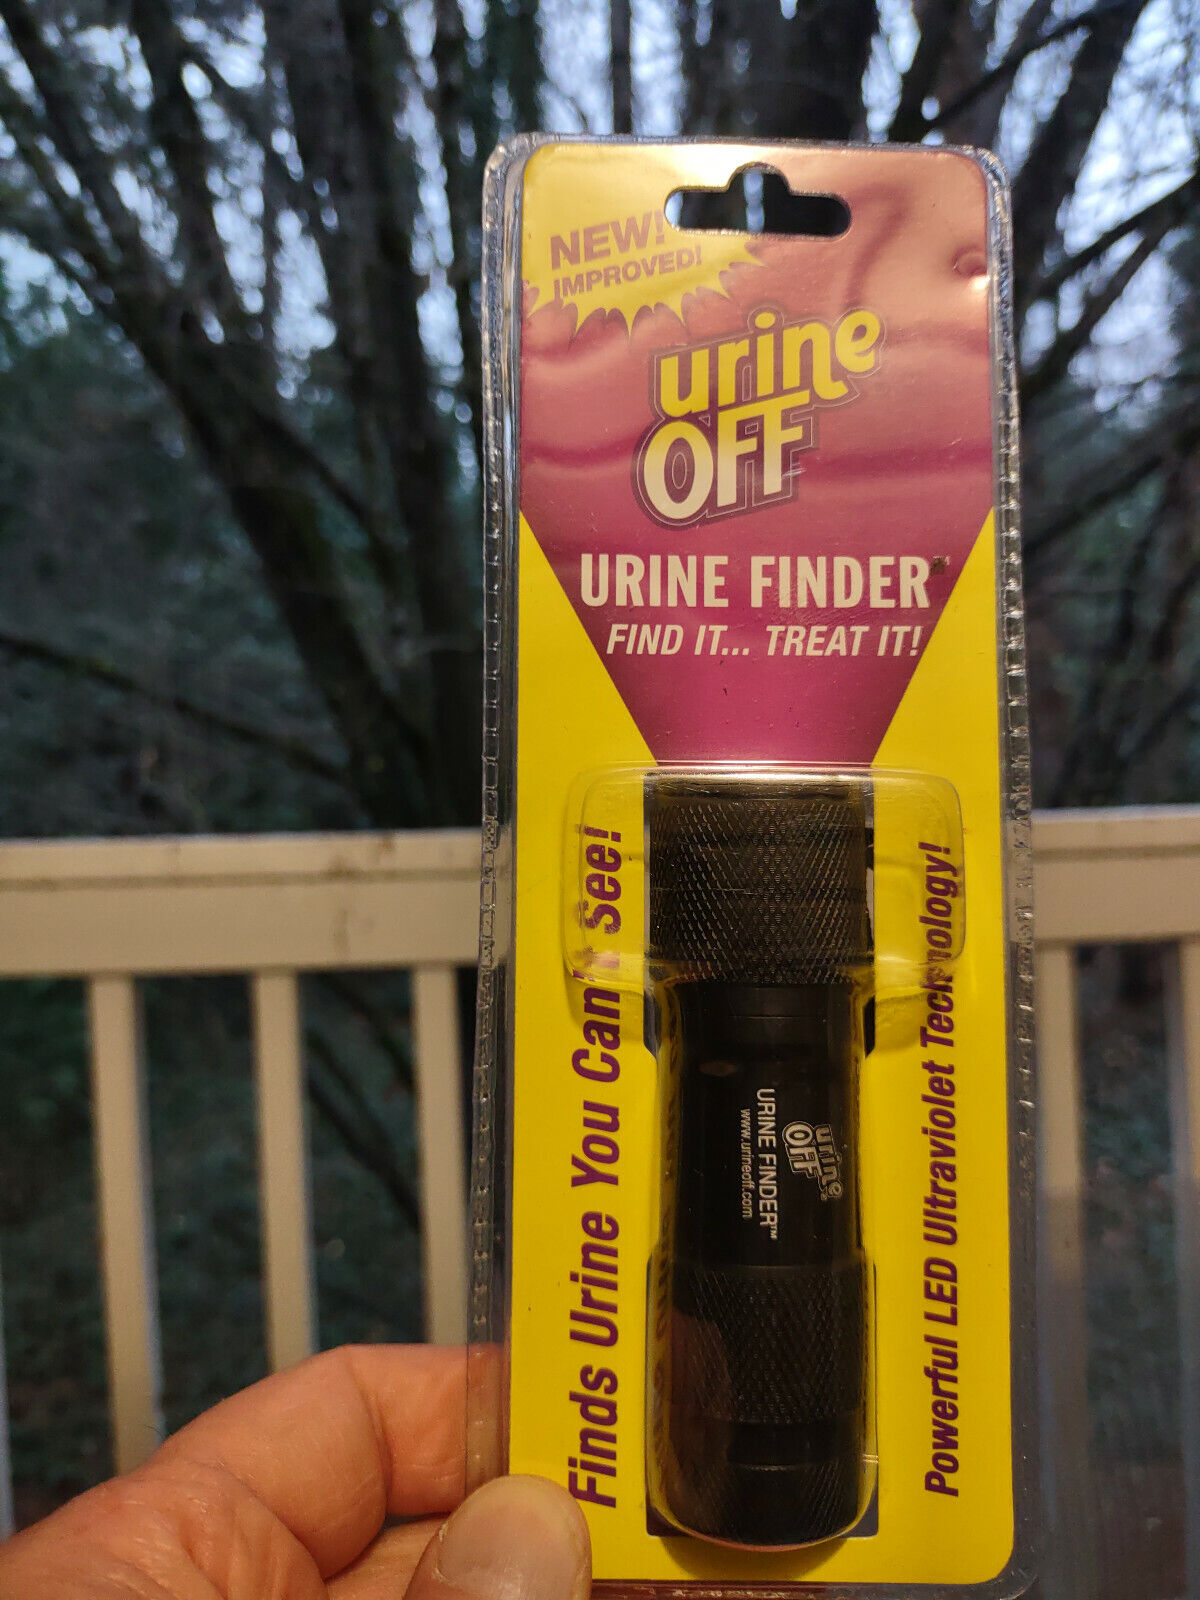 Wholesale LOT of 48 Urine Off Urine Finder New & Improved Blacklight Flashlight Urine Off